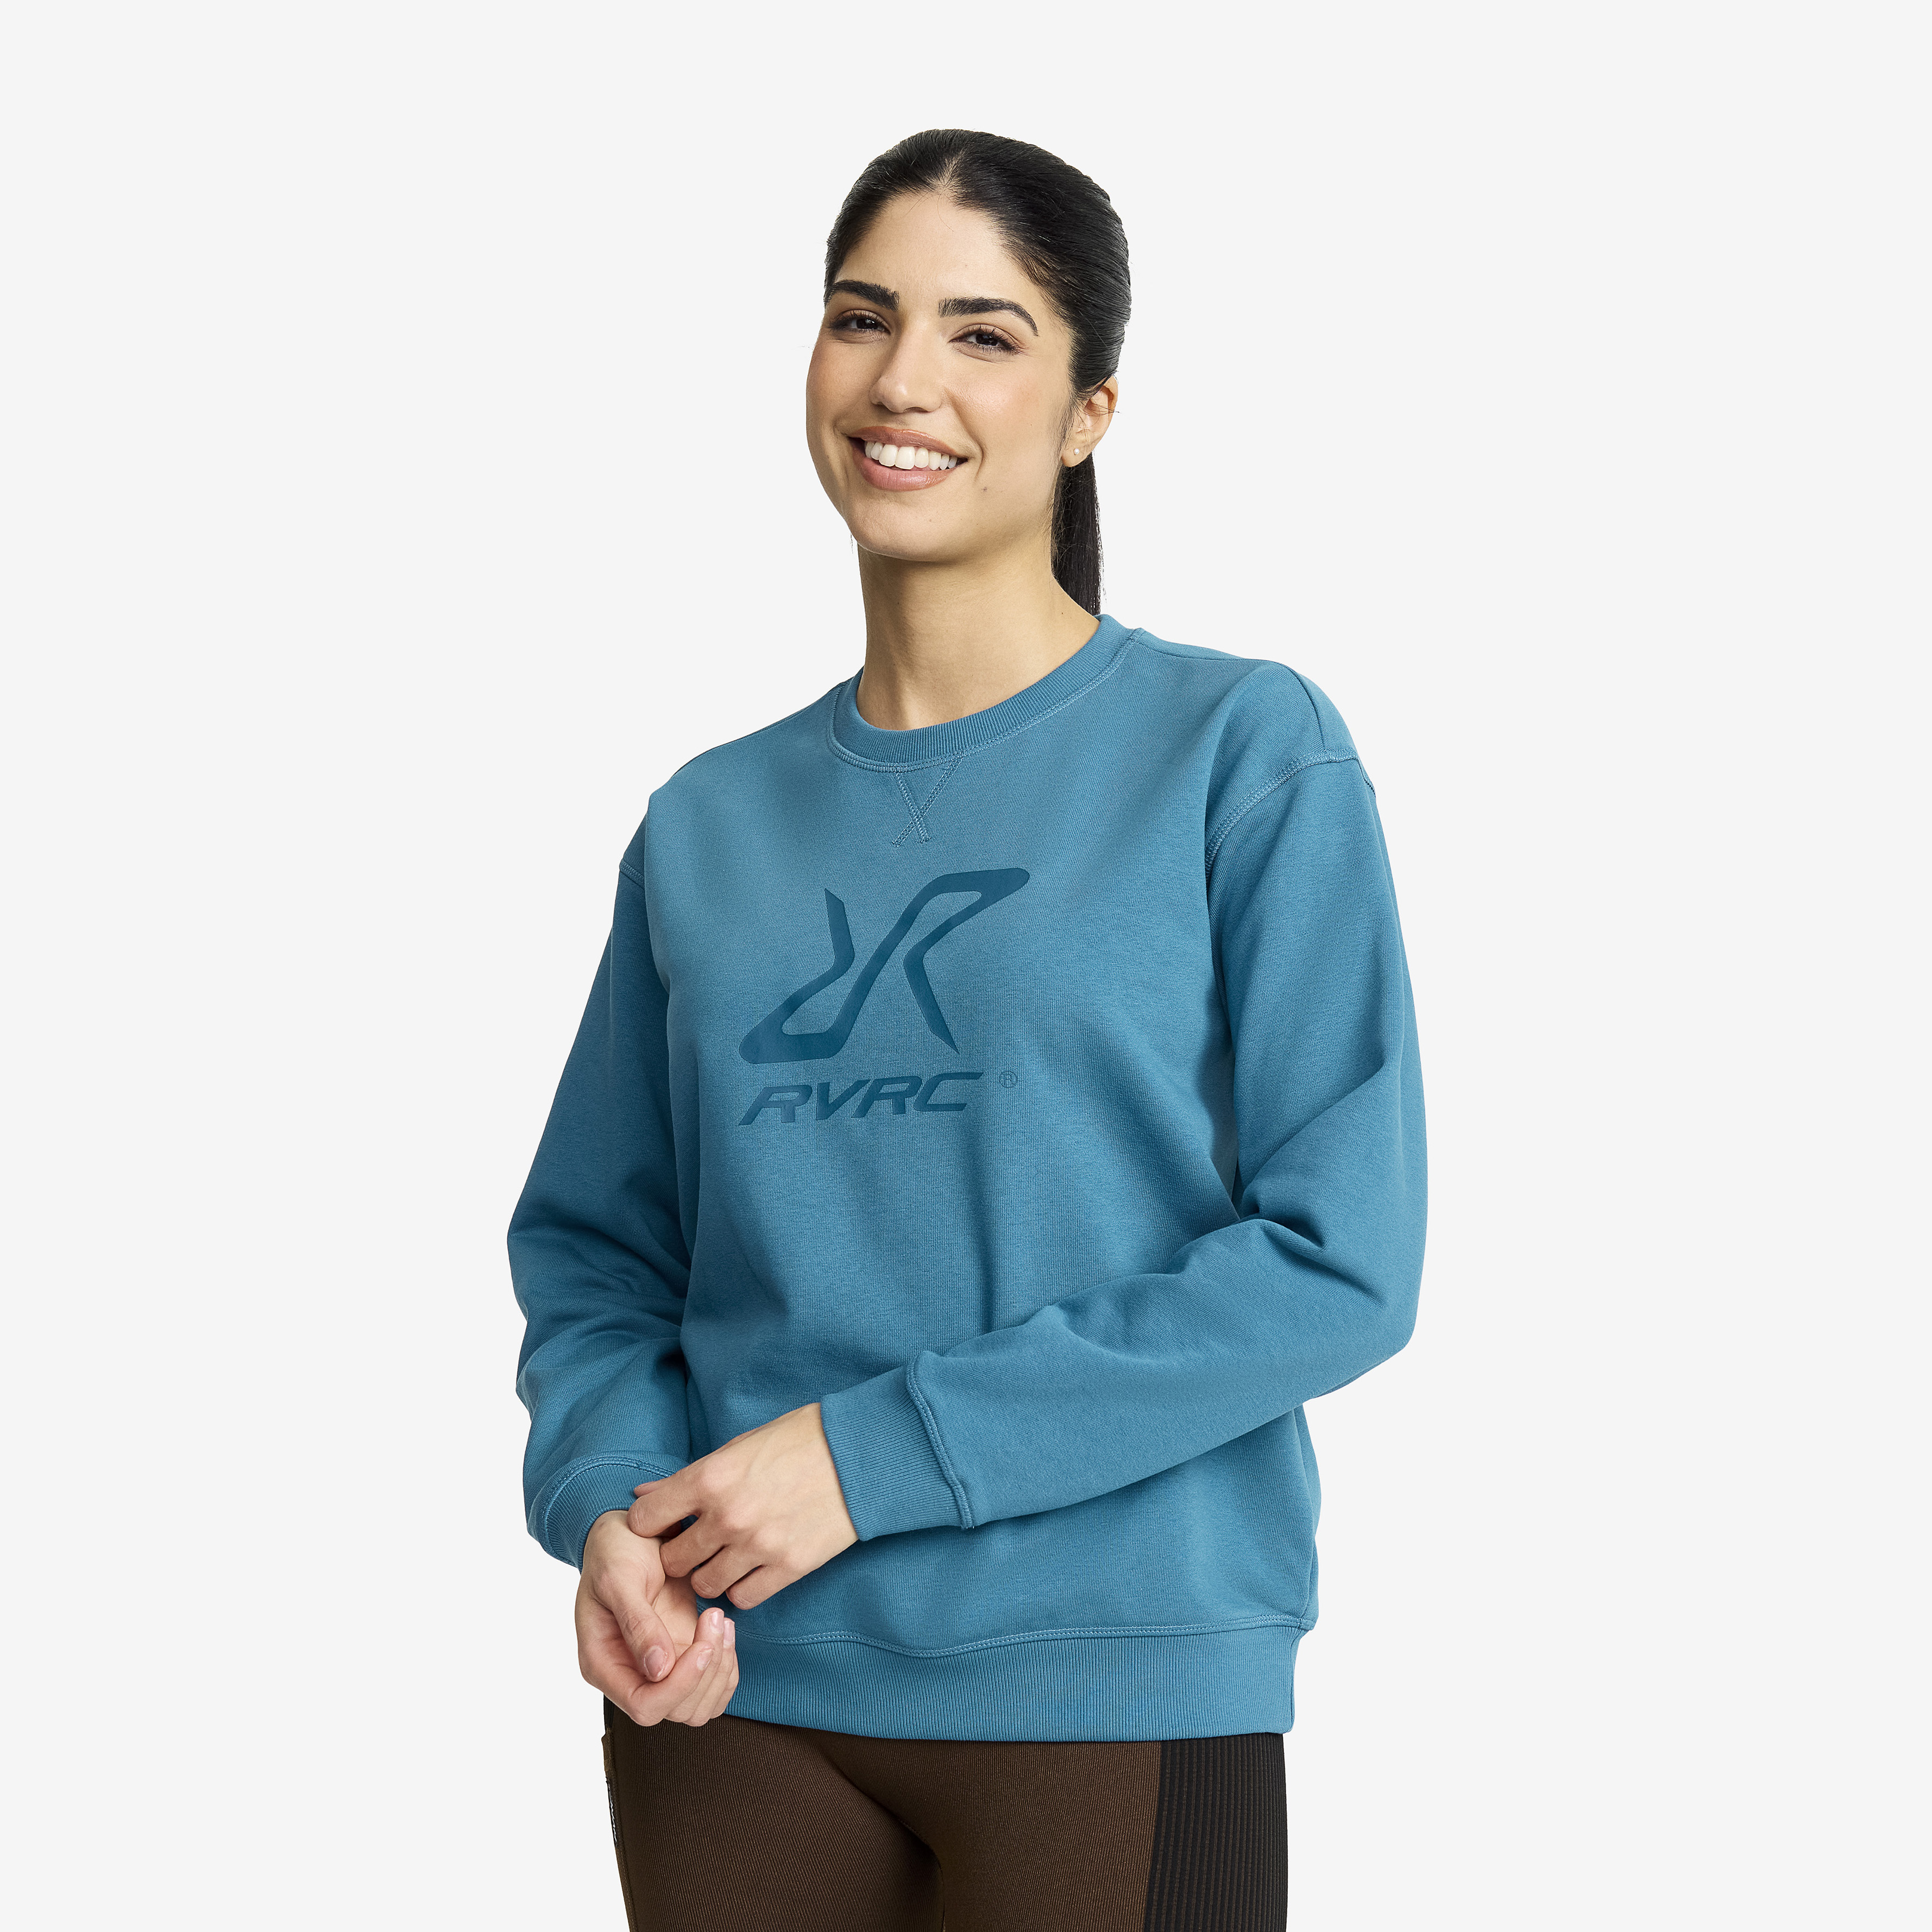 RVRC Sweatshirt Saxony Blue Women